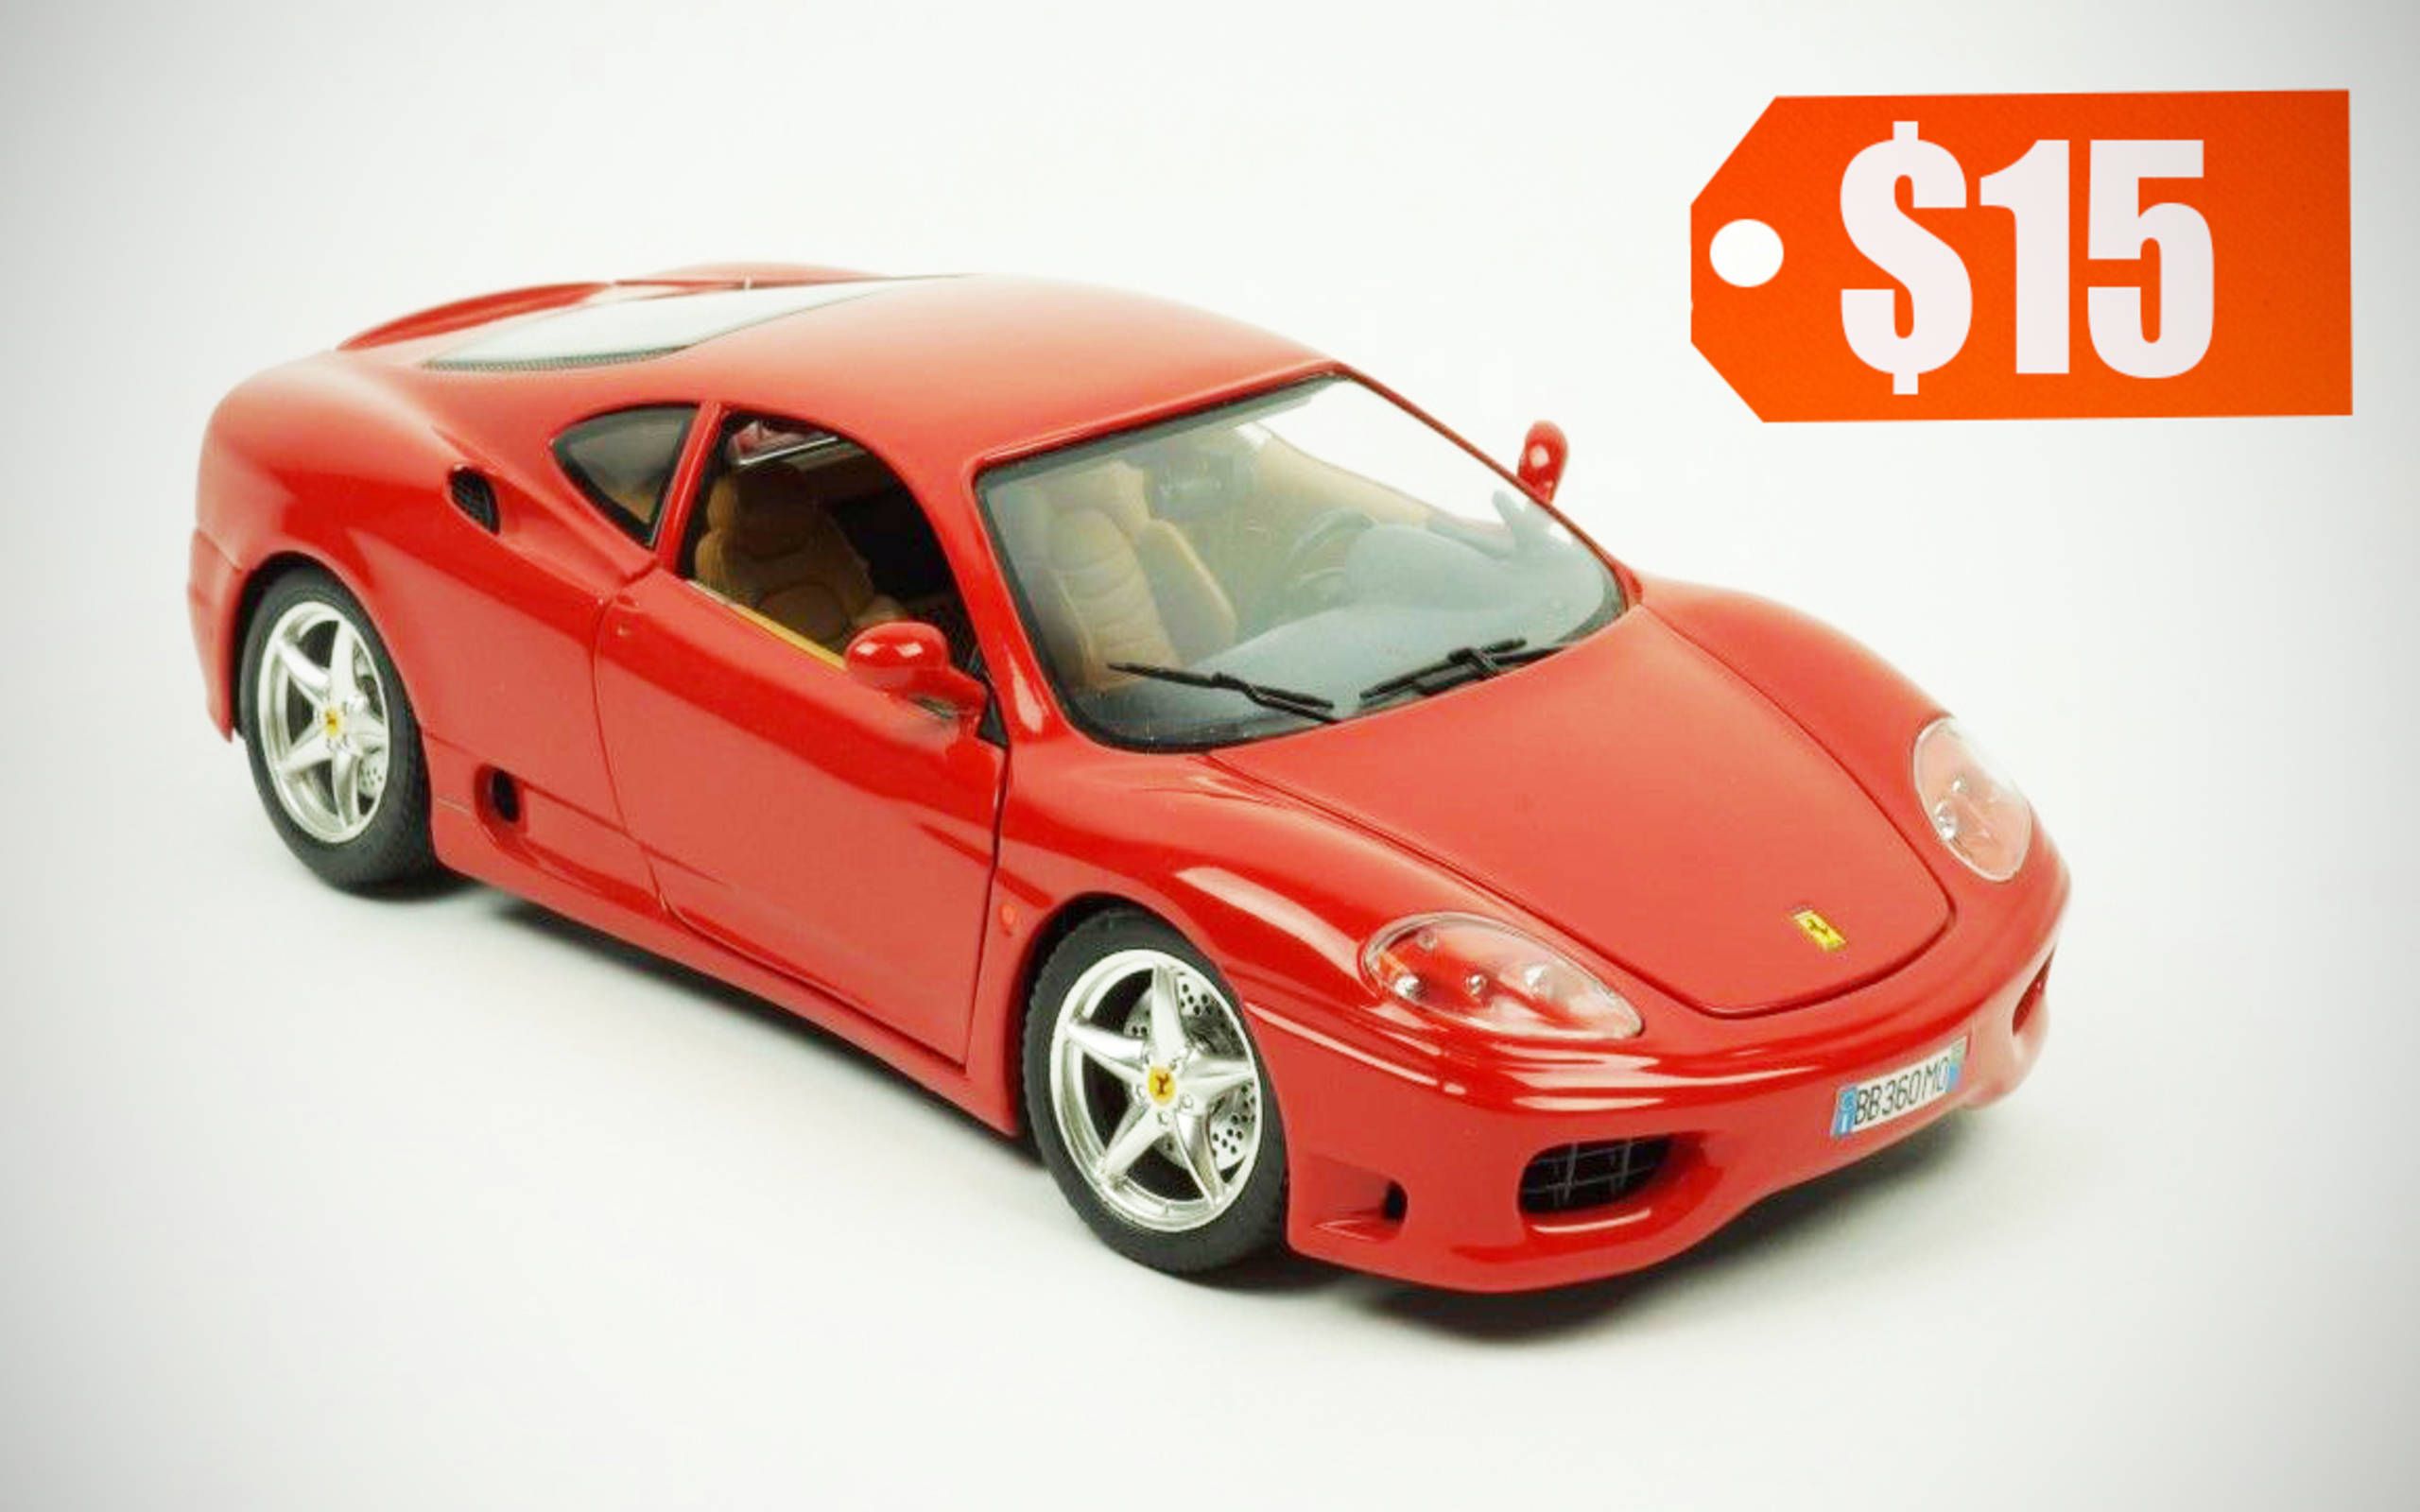 NEW Maisto 1/24 Die Cast Kit Cars Assorted Ferrari Models RED 